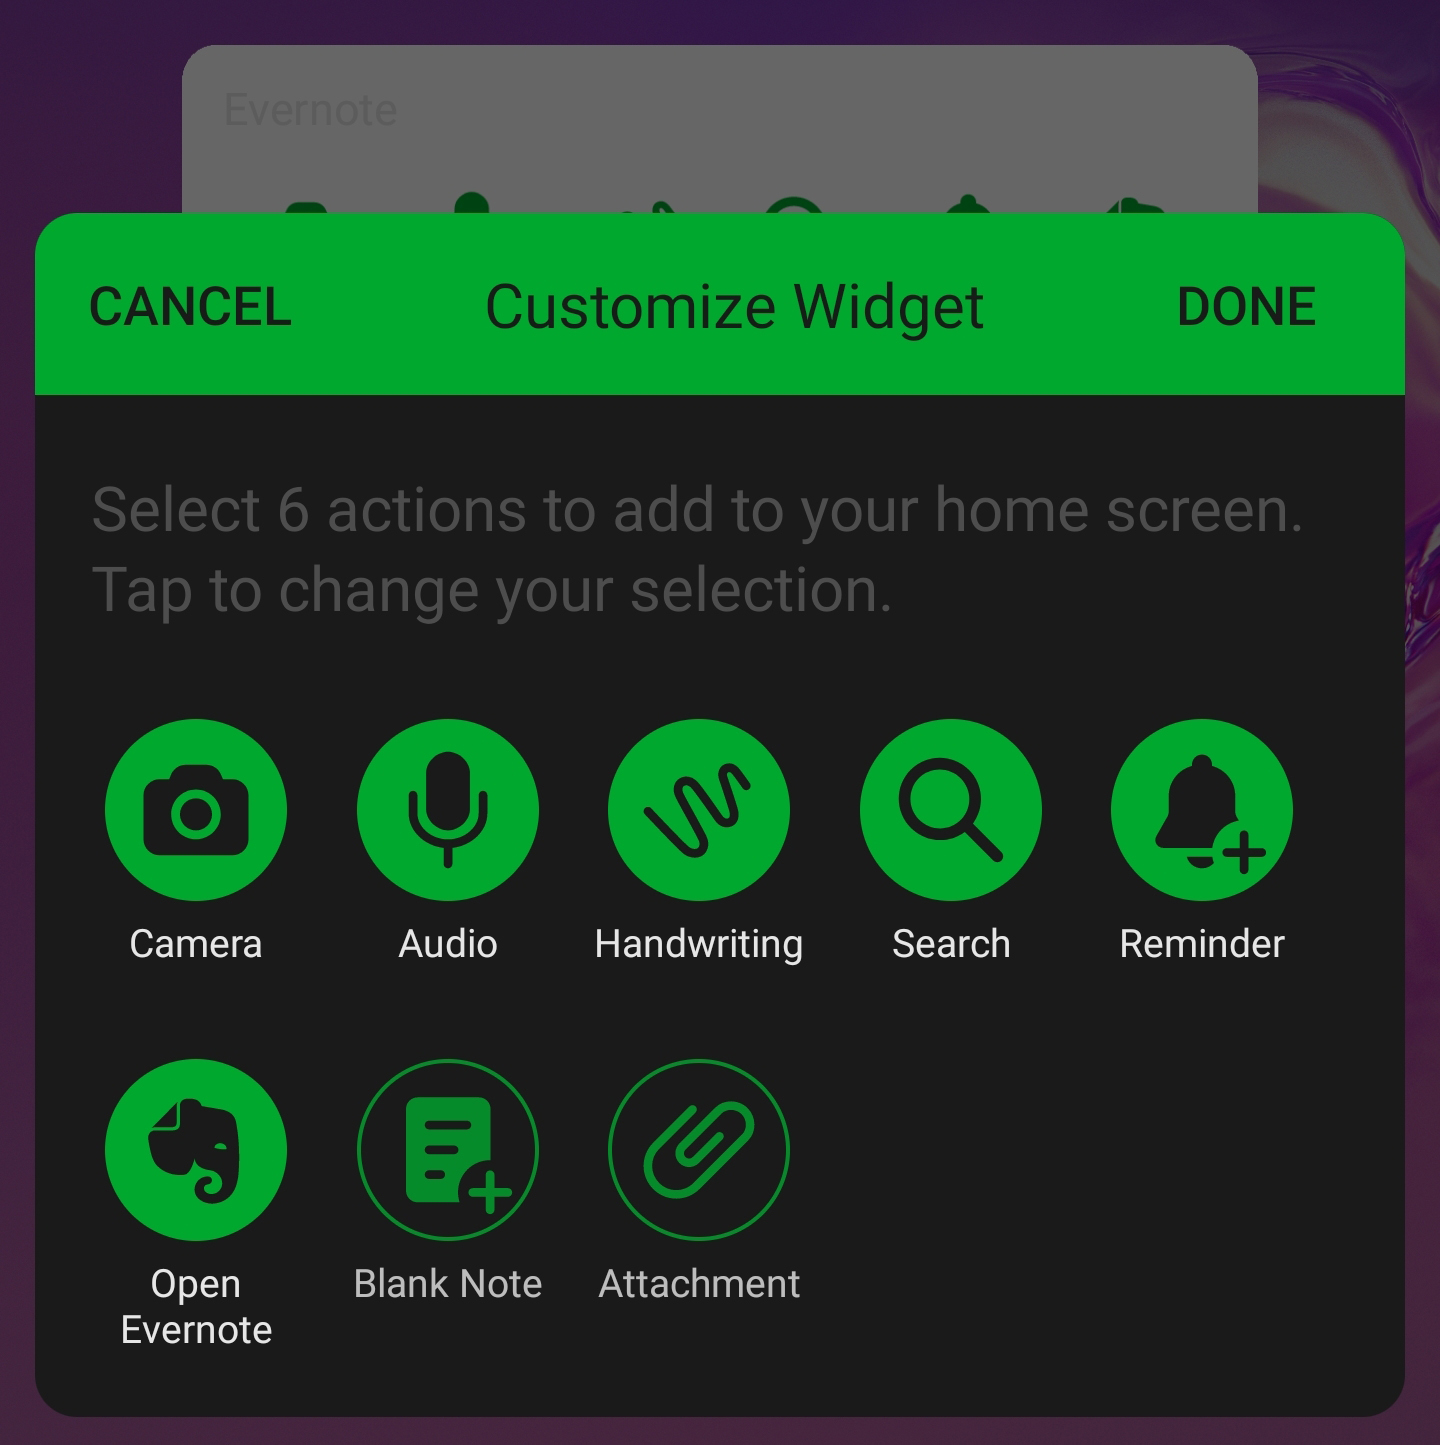 The 'Customize Widget' screen